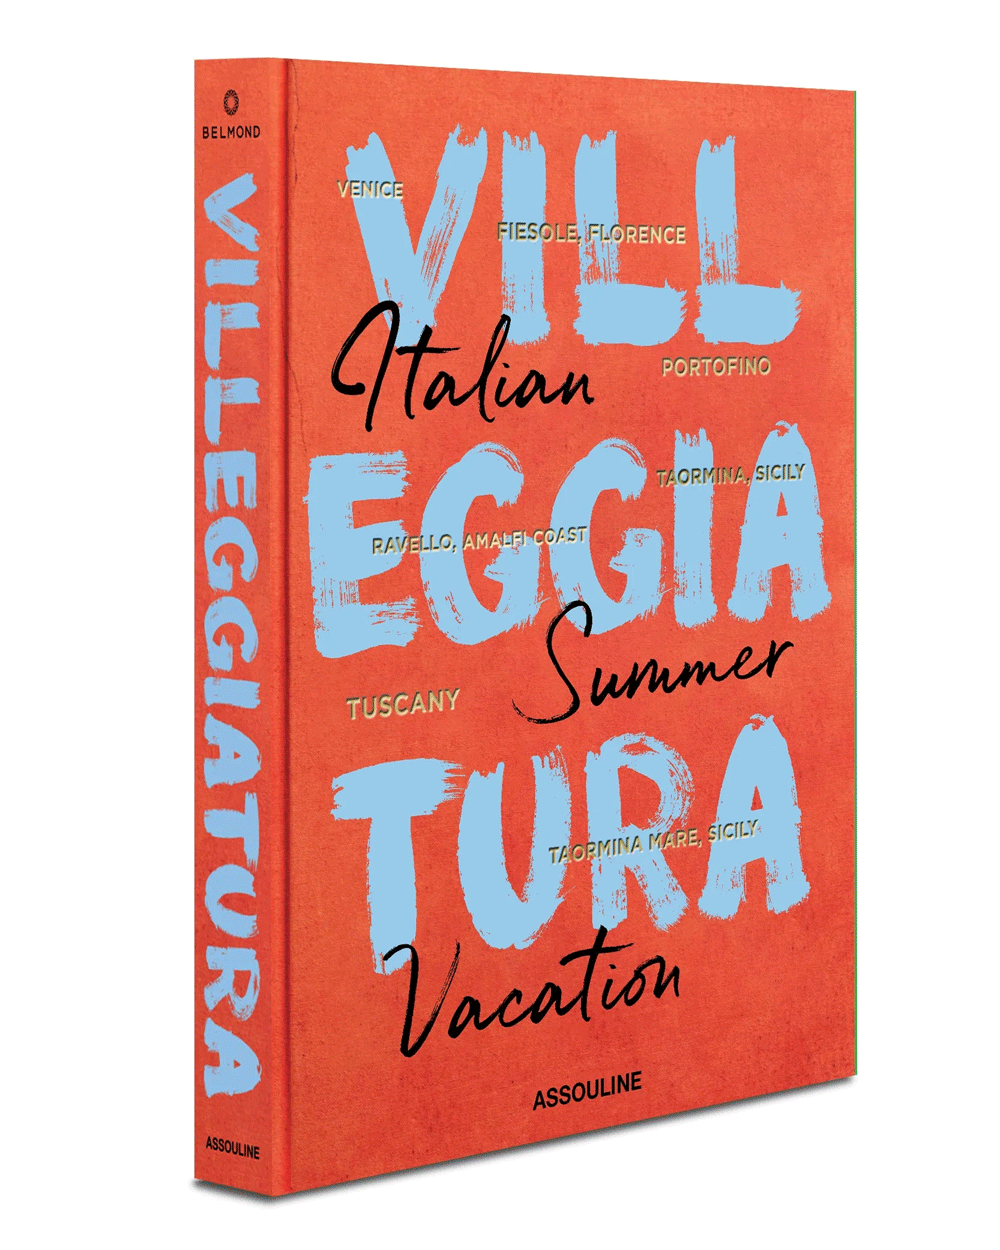 Villeggiatura: Italian Summer Vacation by Cesare Cunaccia